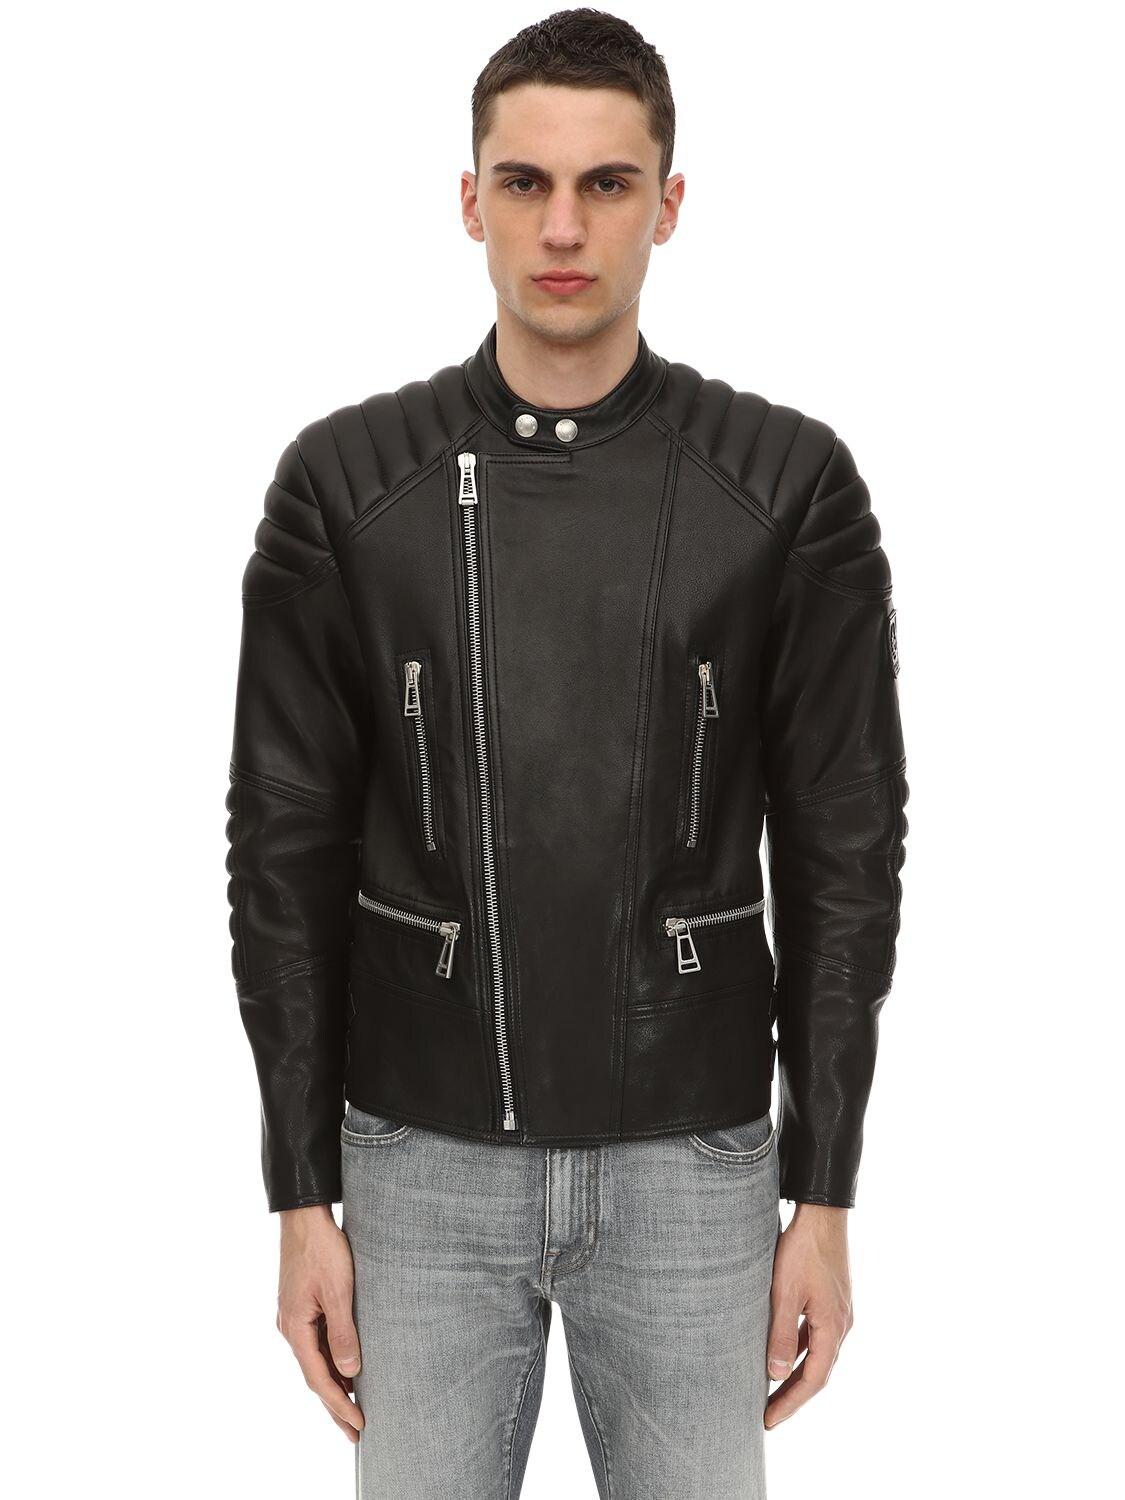 Belstaff Sidney Leather Jacket in Black for Men - Lyst